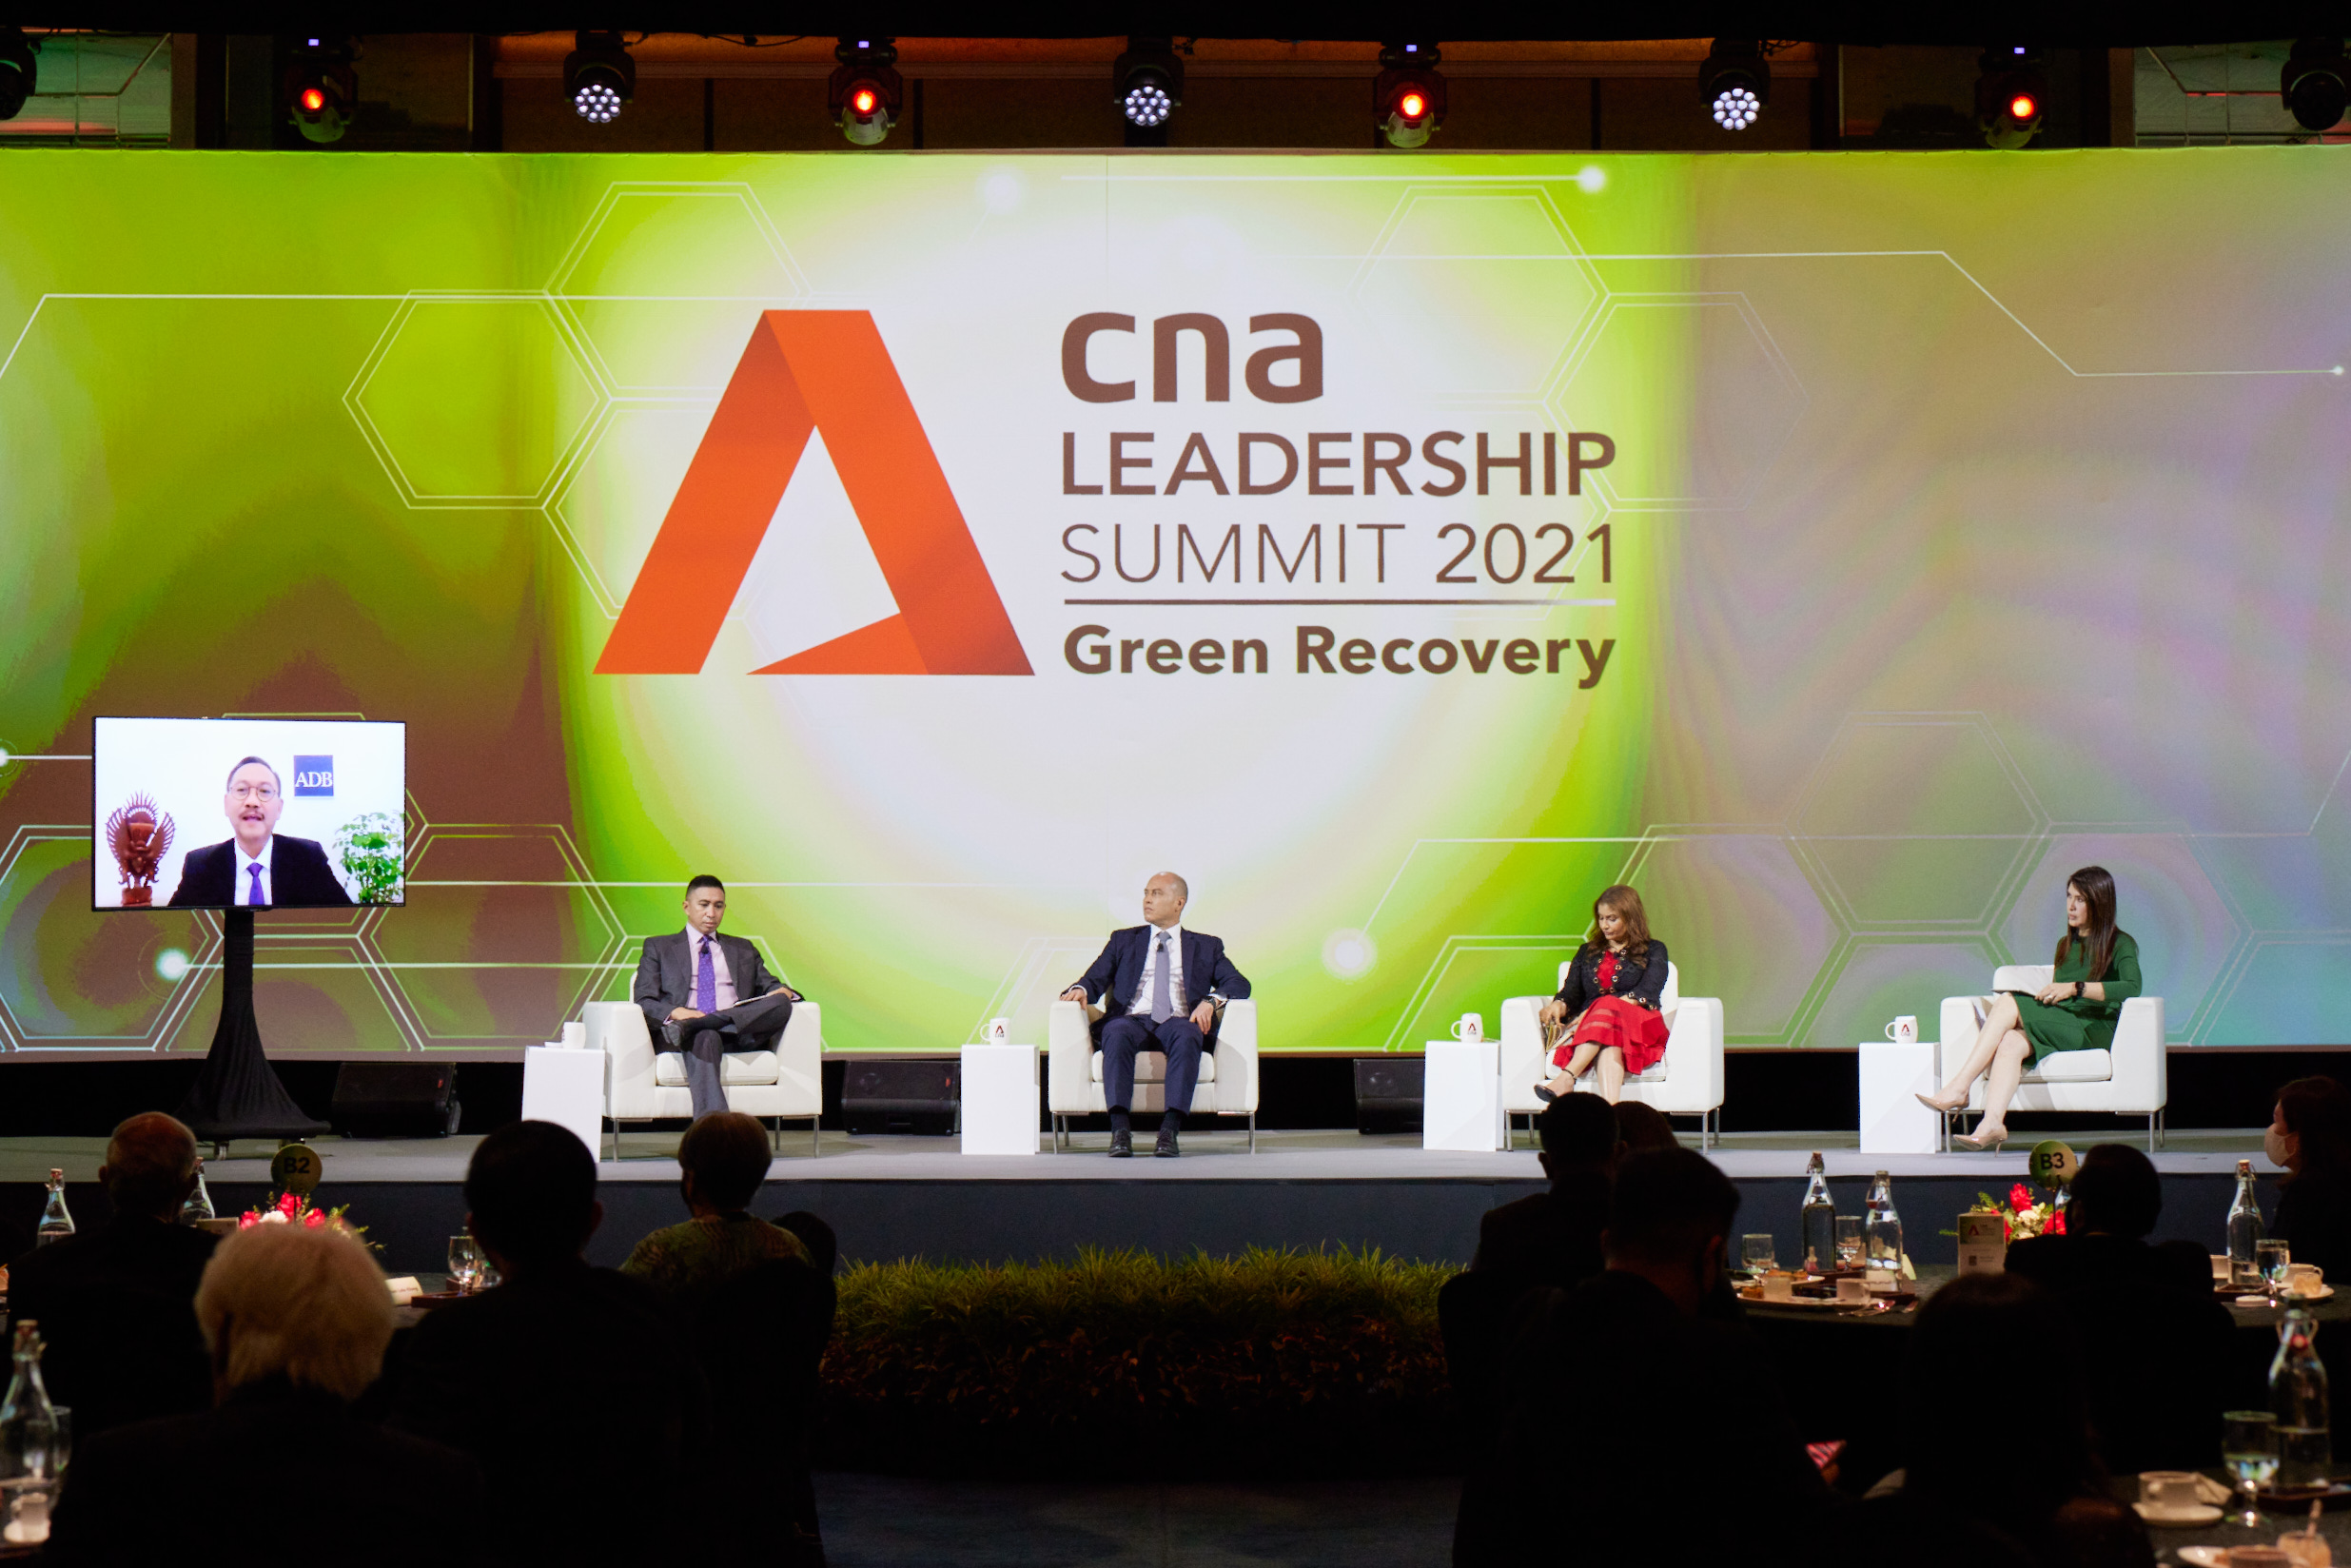 CNA Leadership Summit 2021: Green Recovery